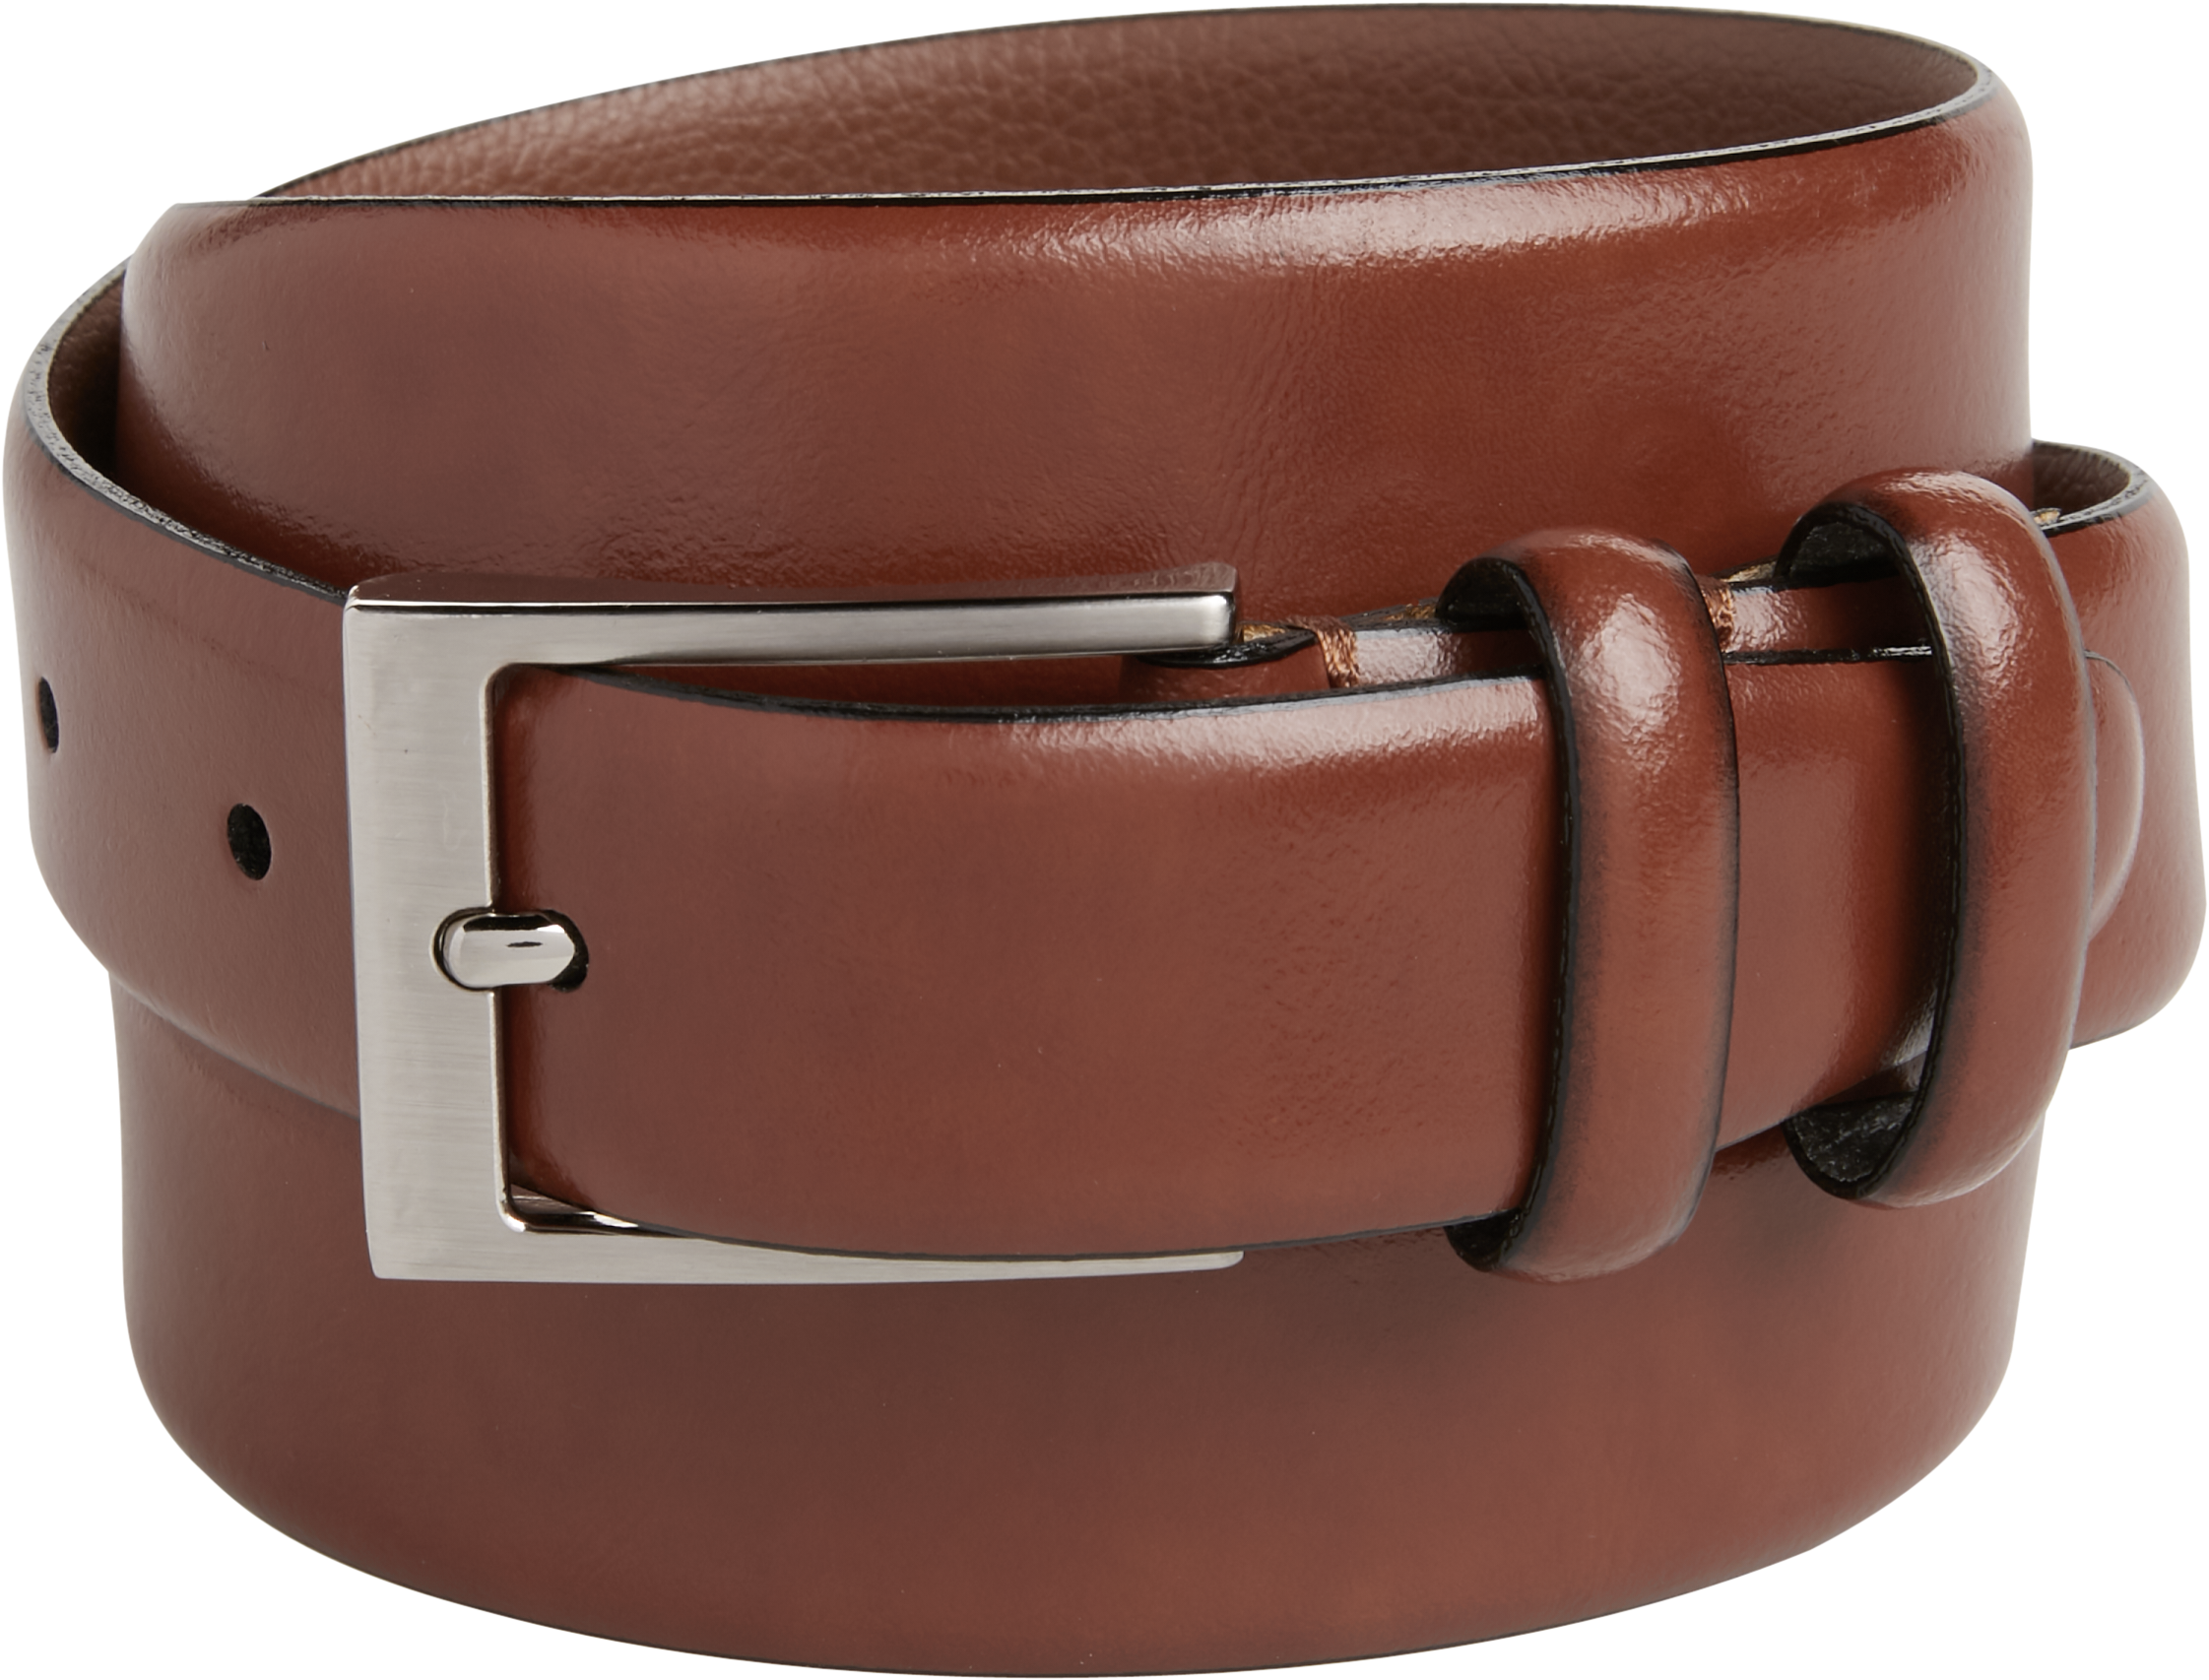 leather dress belt